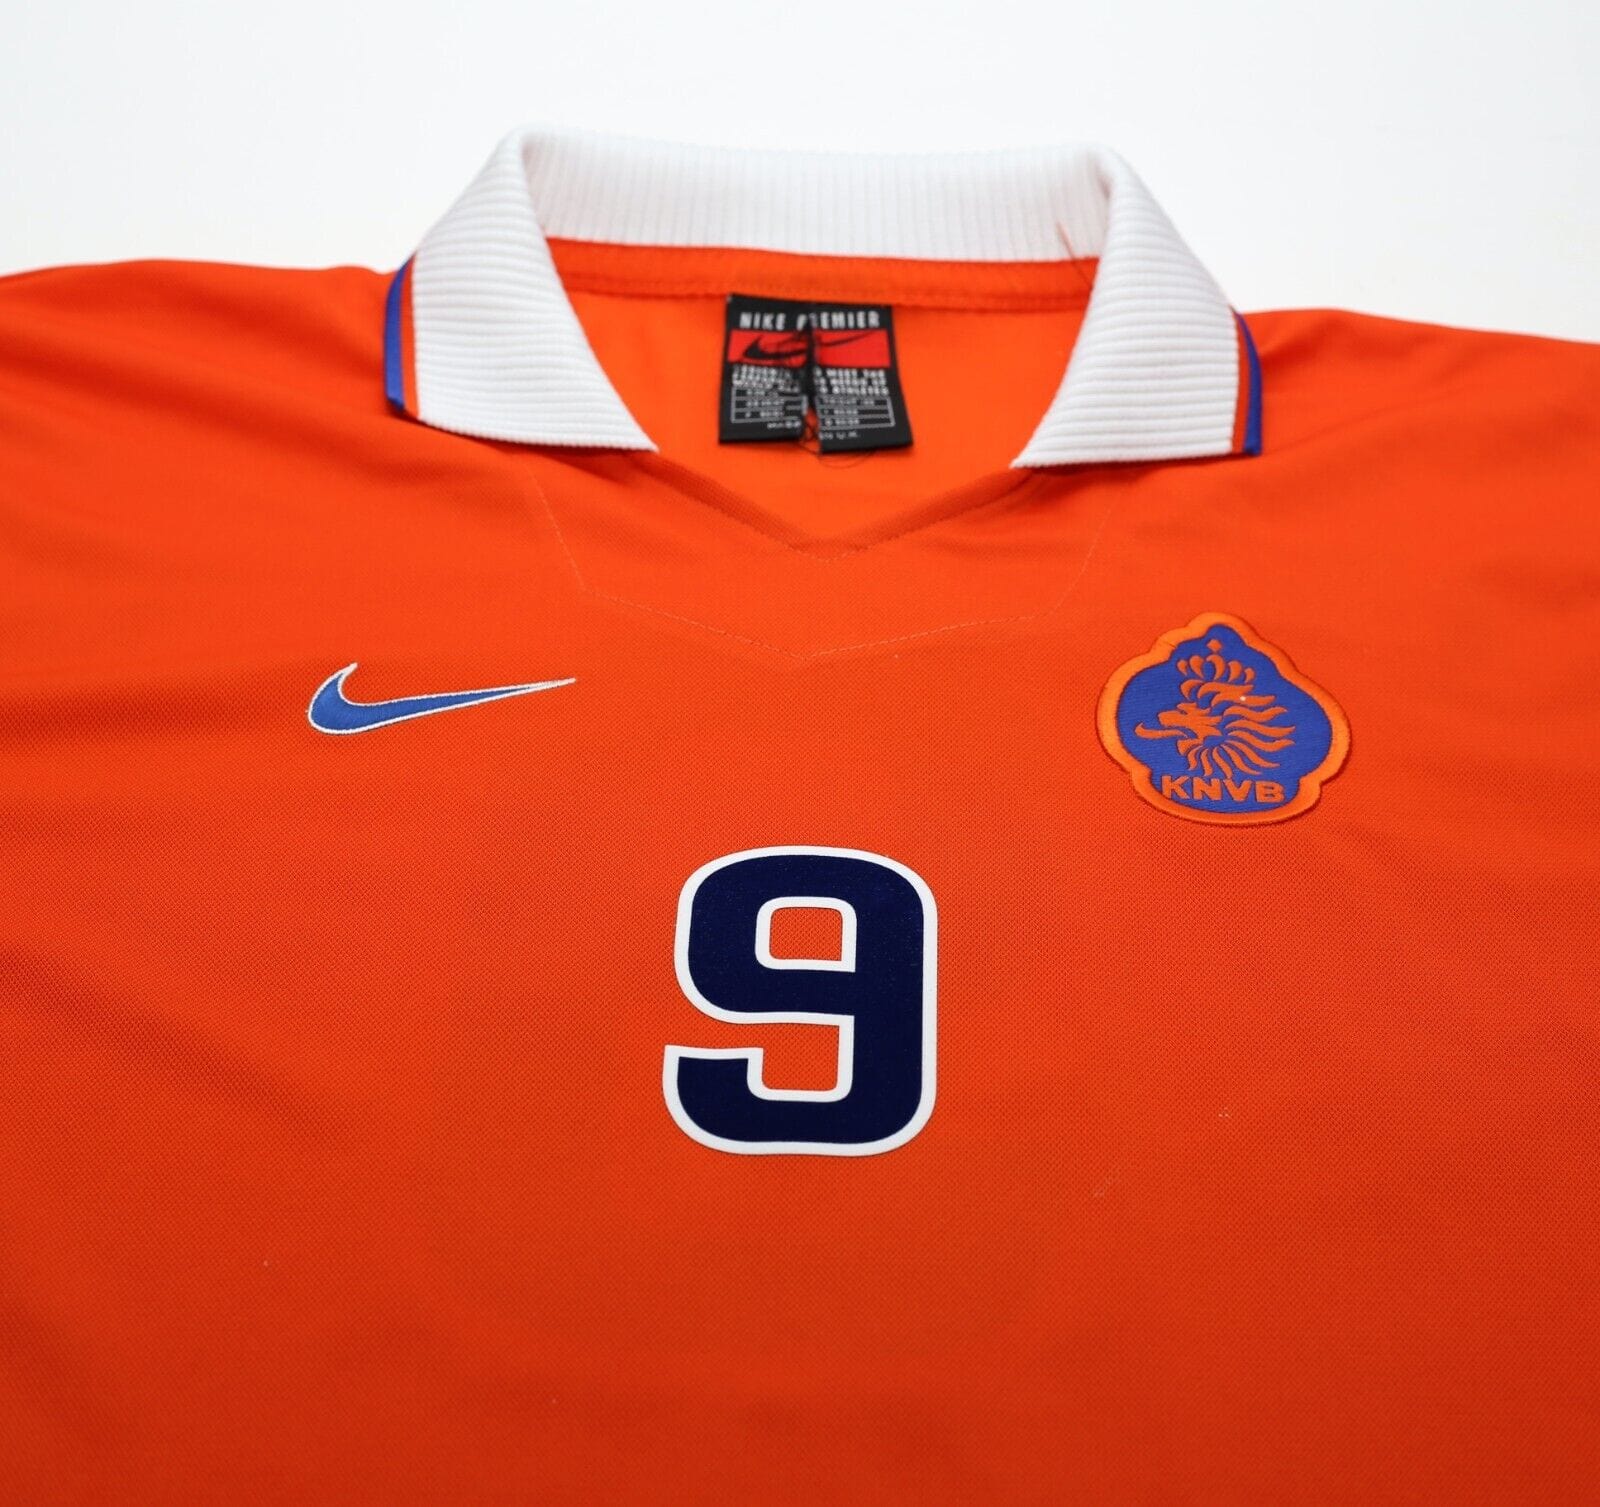 1997/98 KLUIVERT #9 Holland Vintage Nike Home Football Shirt (L)